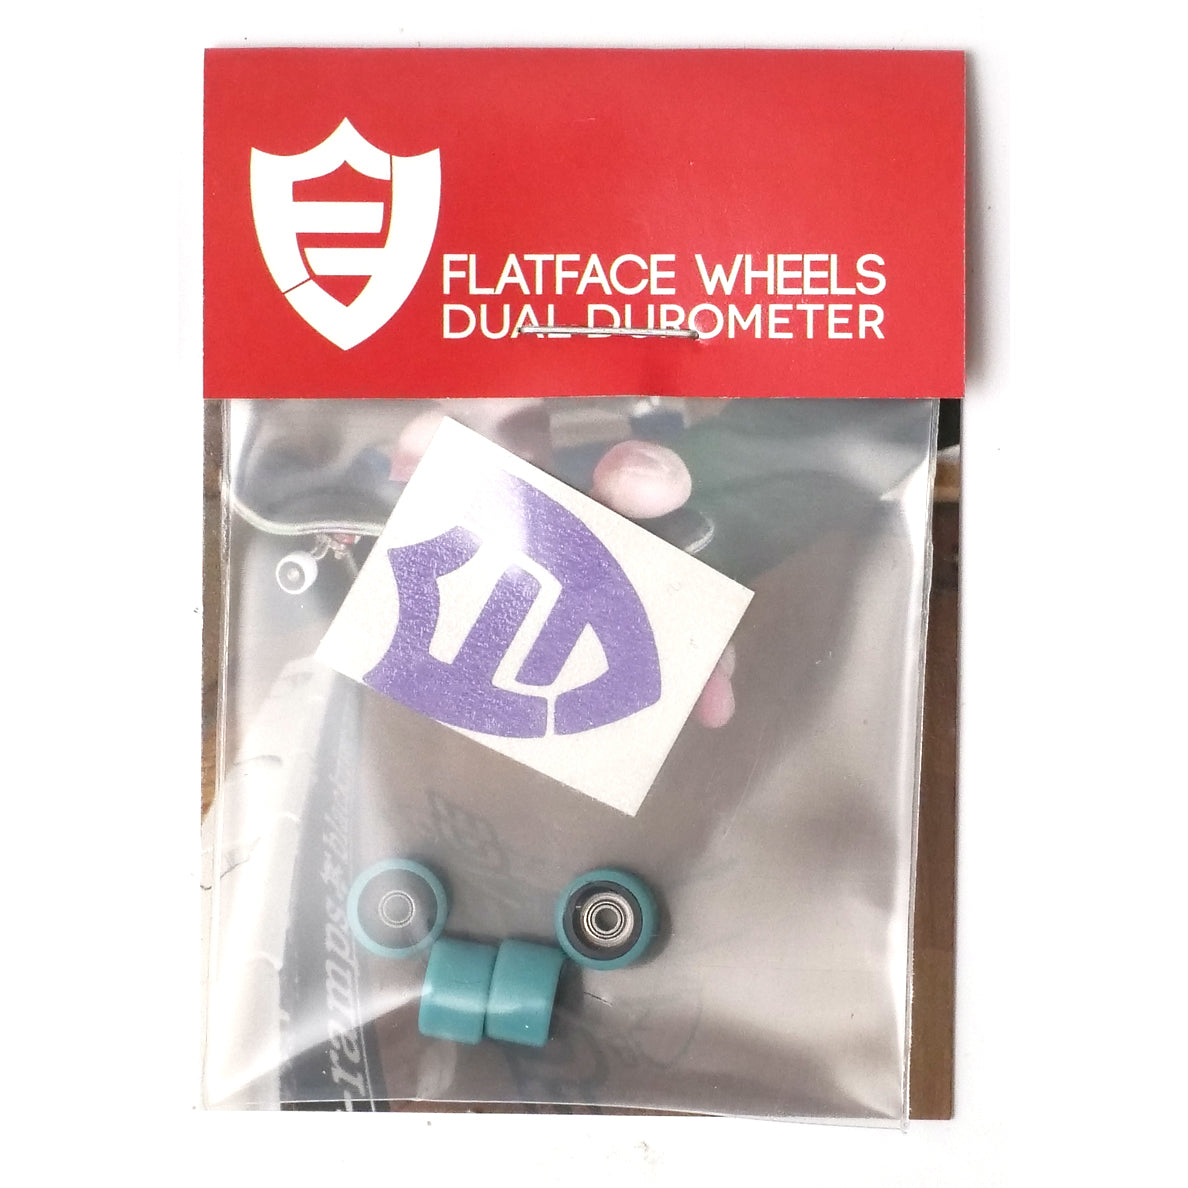 FlatFace Wheels - Dual Durometer Black/Turquoise